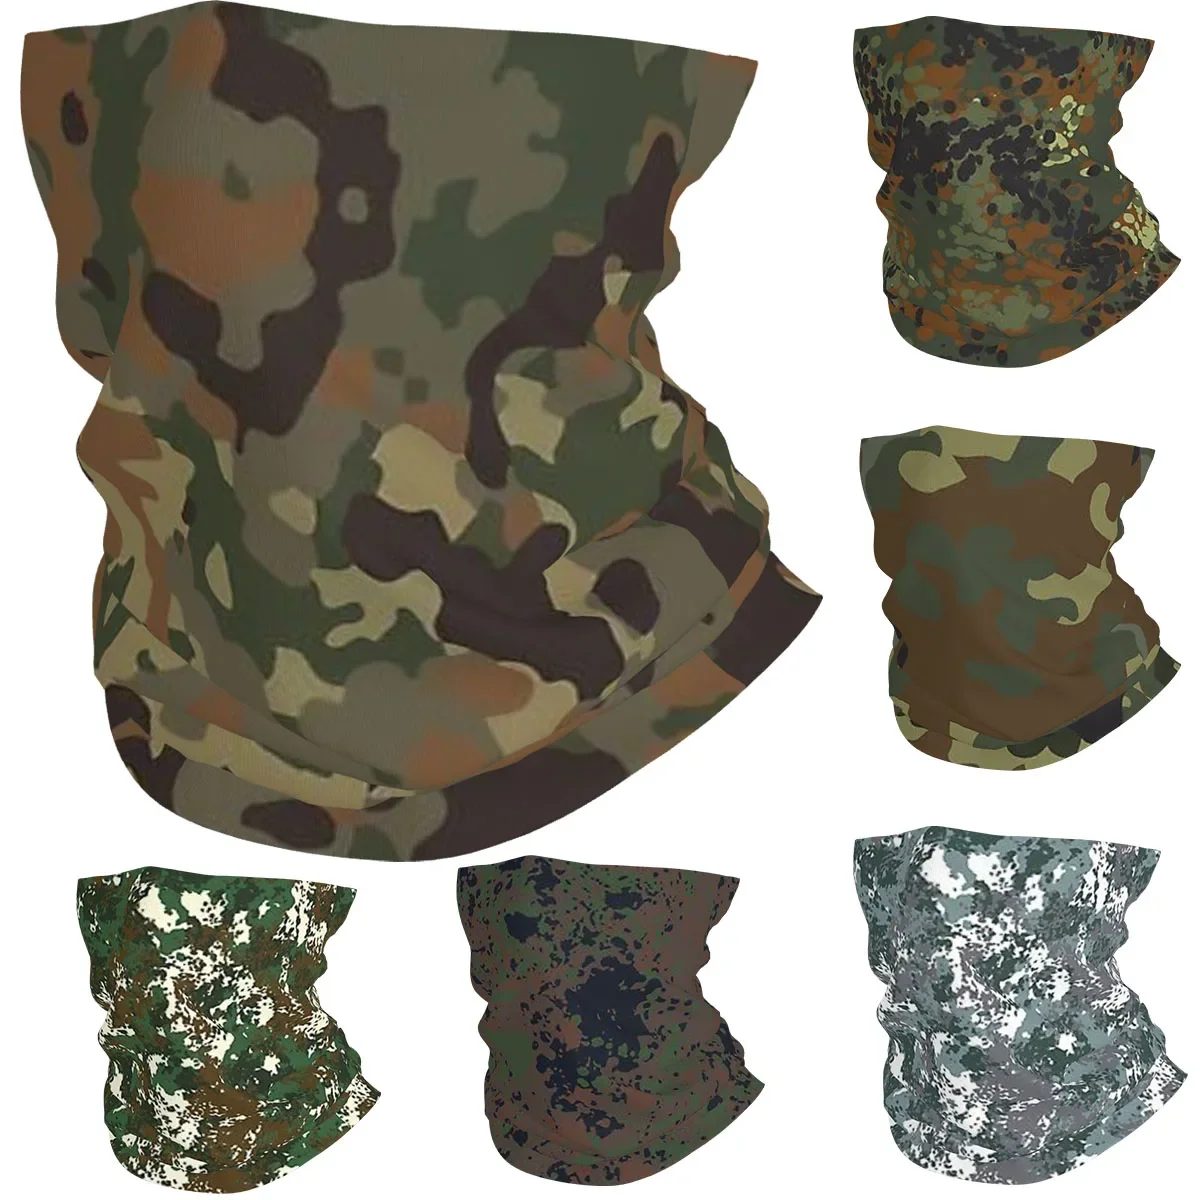 

Flecktarn Camouflage Bandana Neck Cover Army Military Camo Mask Scarf Balaclava Outdoor Sports for Men Women Adult All Season